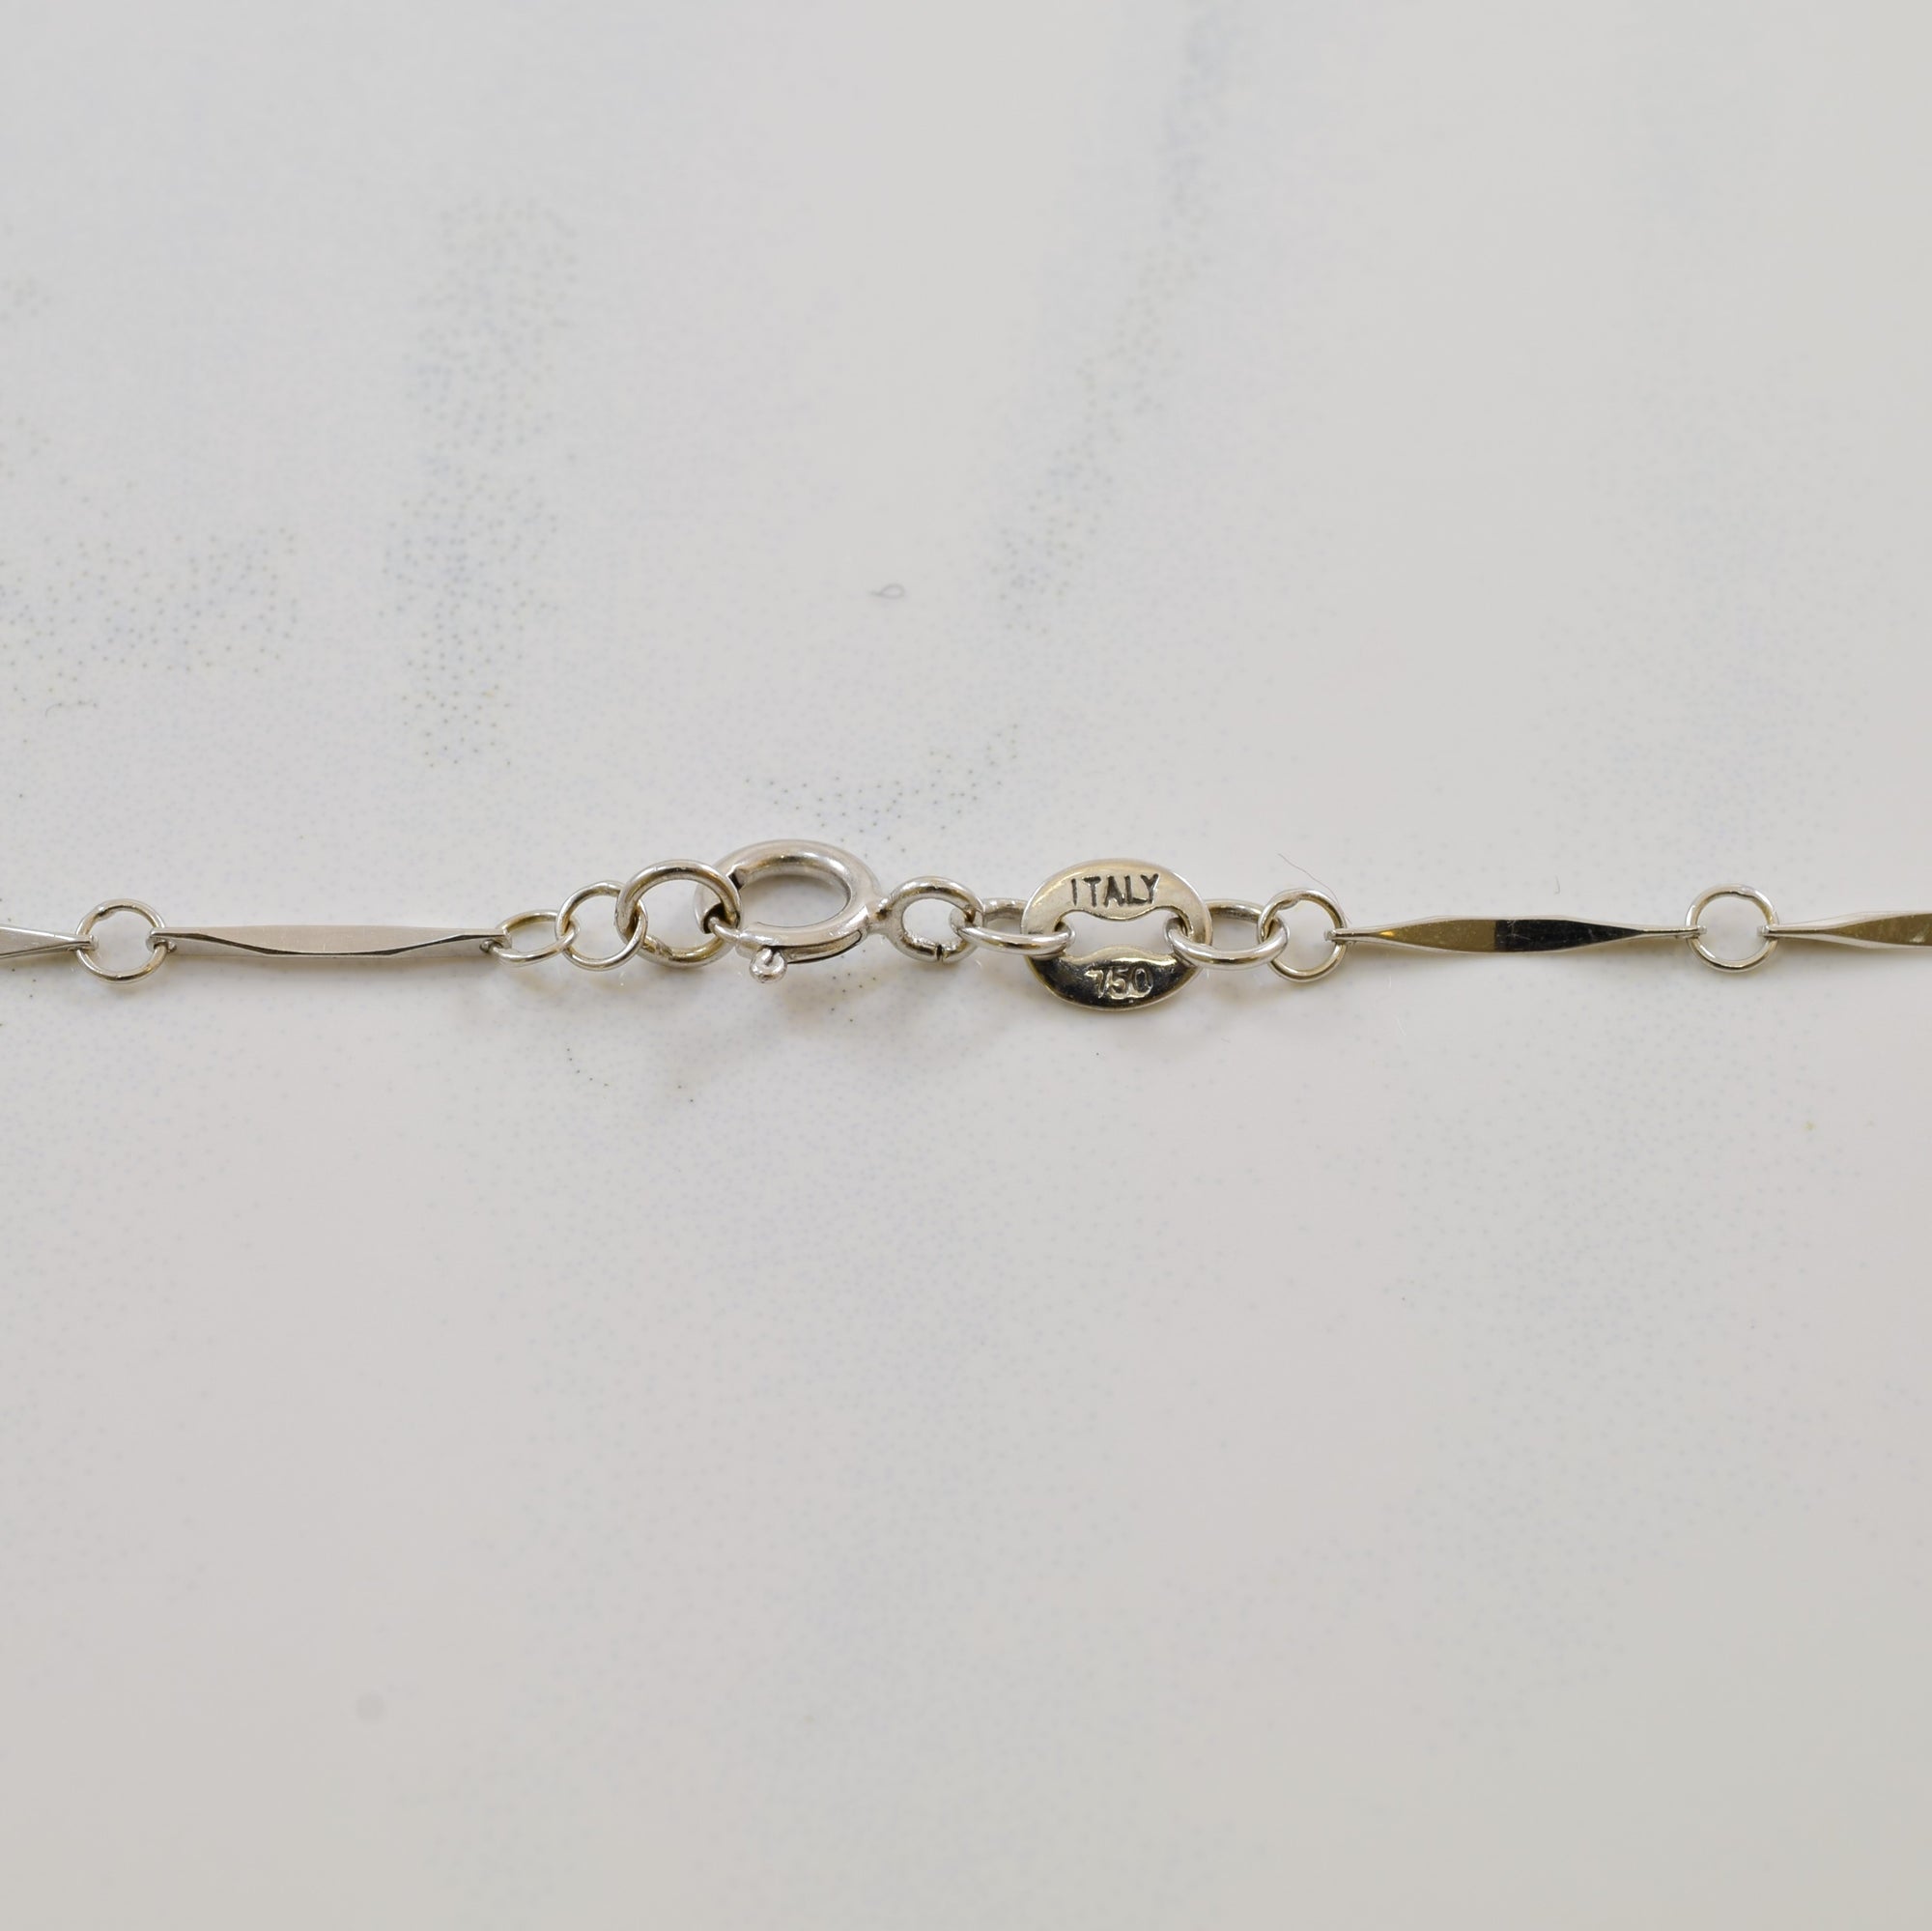 Diamond Cut Ball Necklace | 15.5